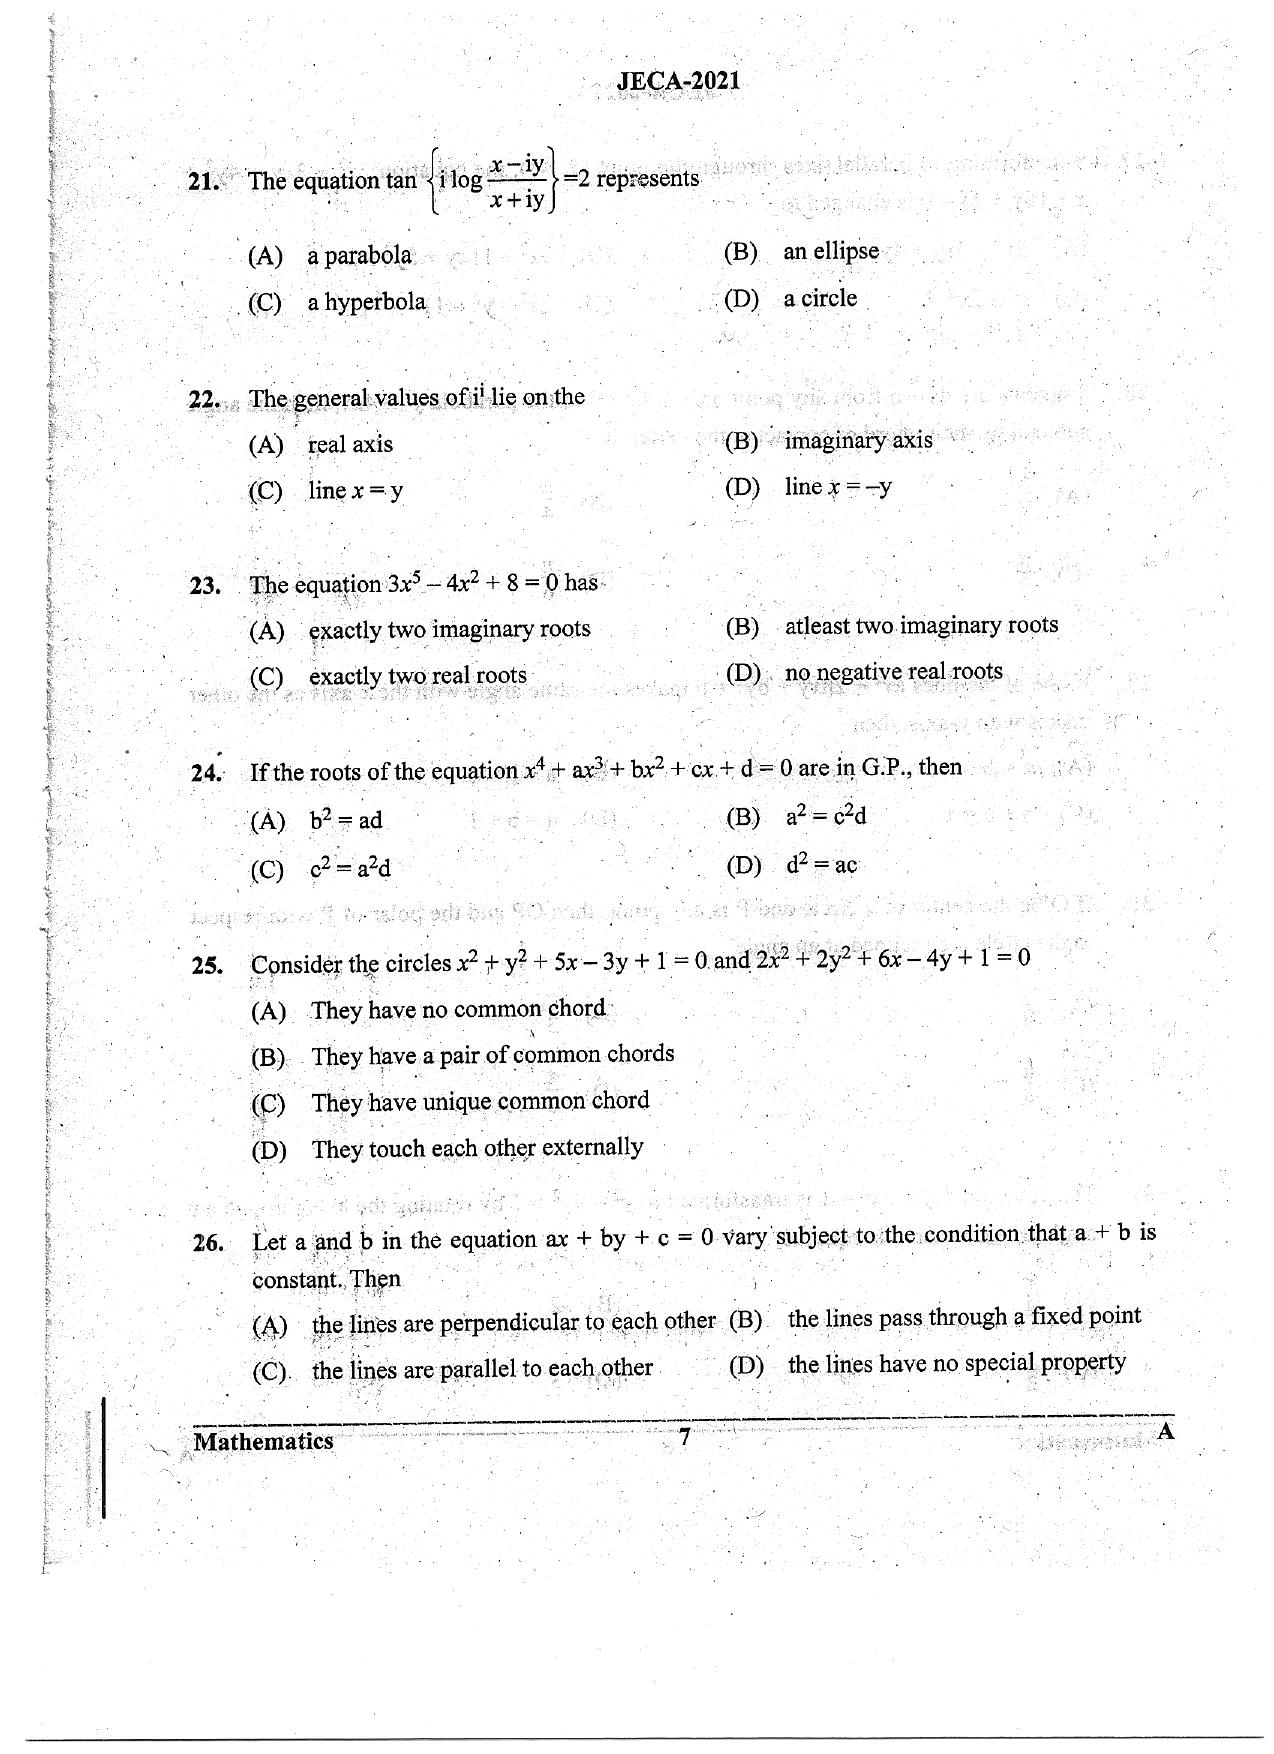 WB JECA 2021 Mathematics Question Paper - Page 7